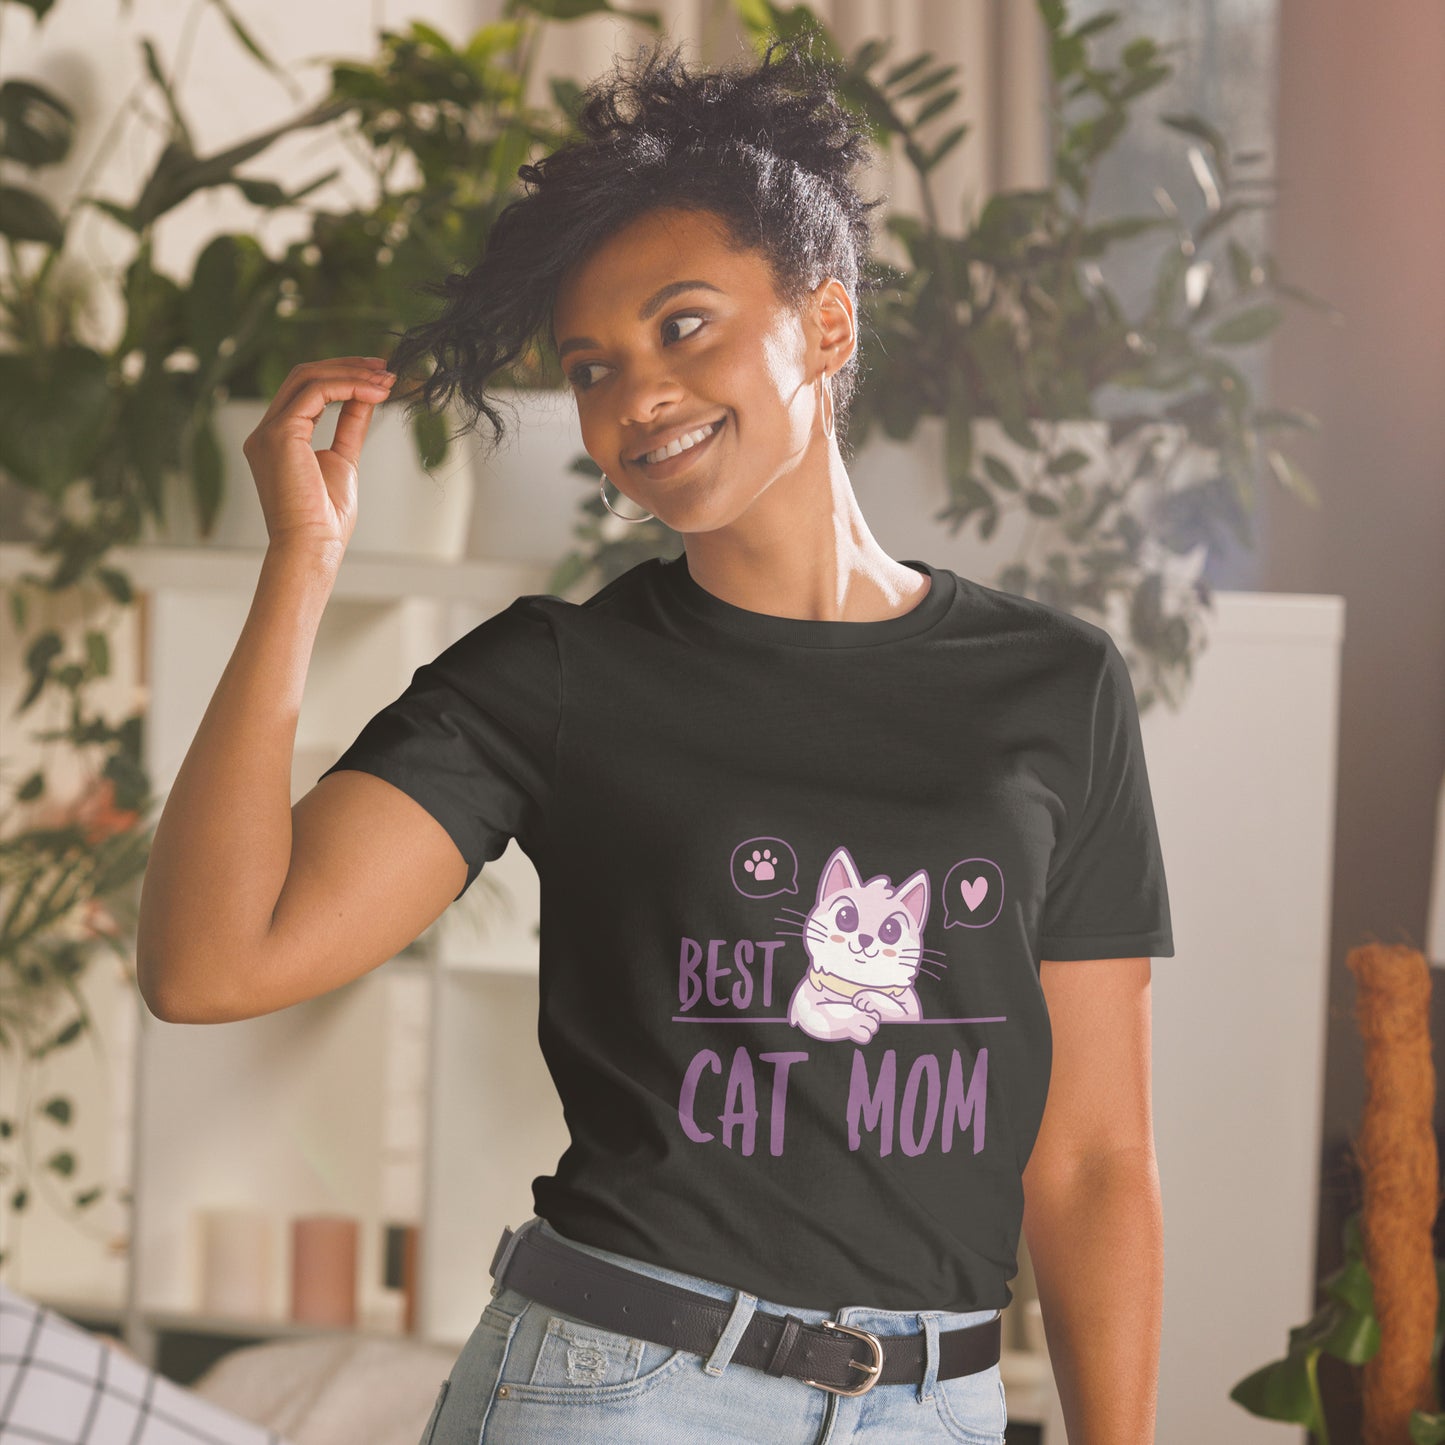 Best Cat Mom Short-Sleeve Unisex T-Shirt